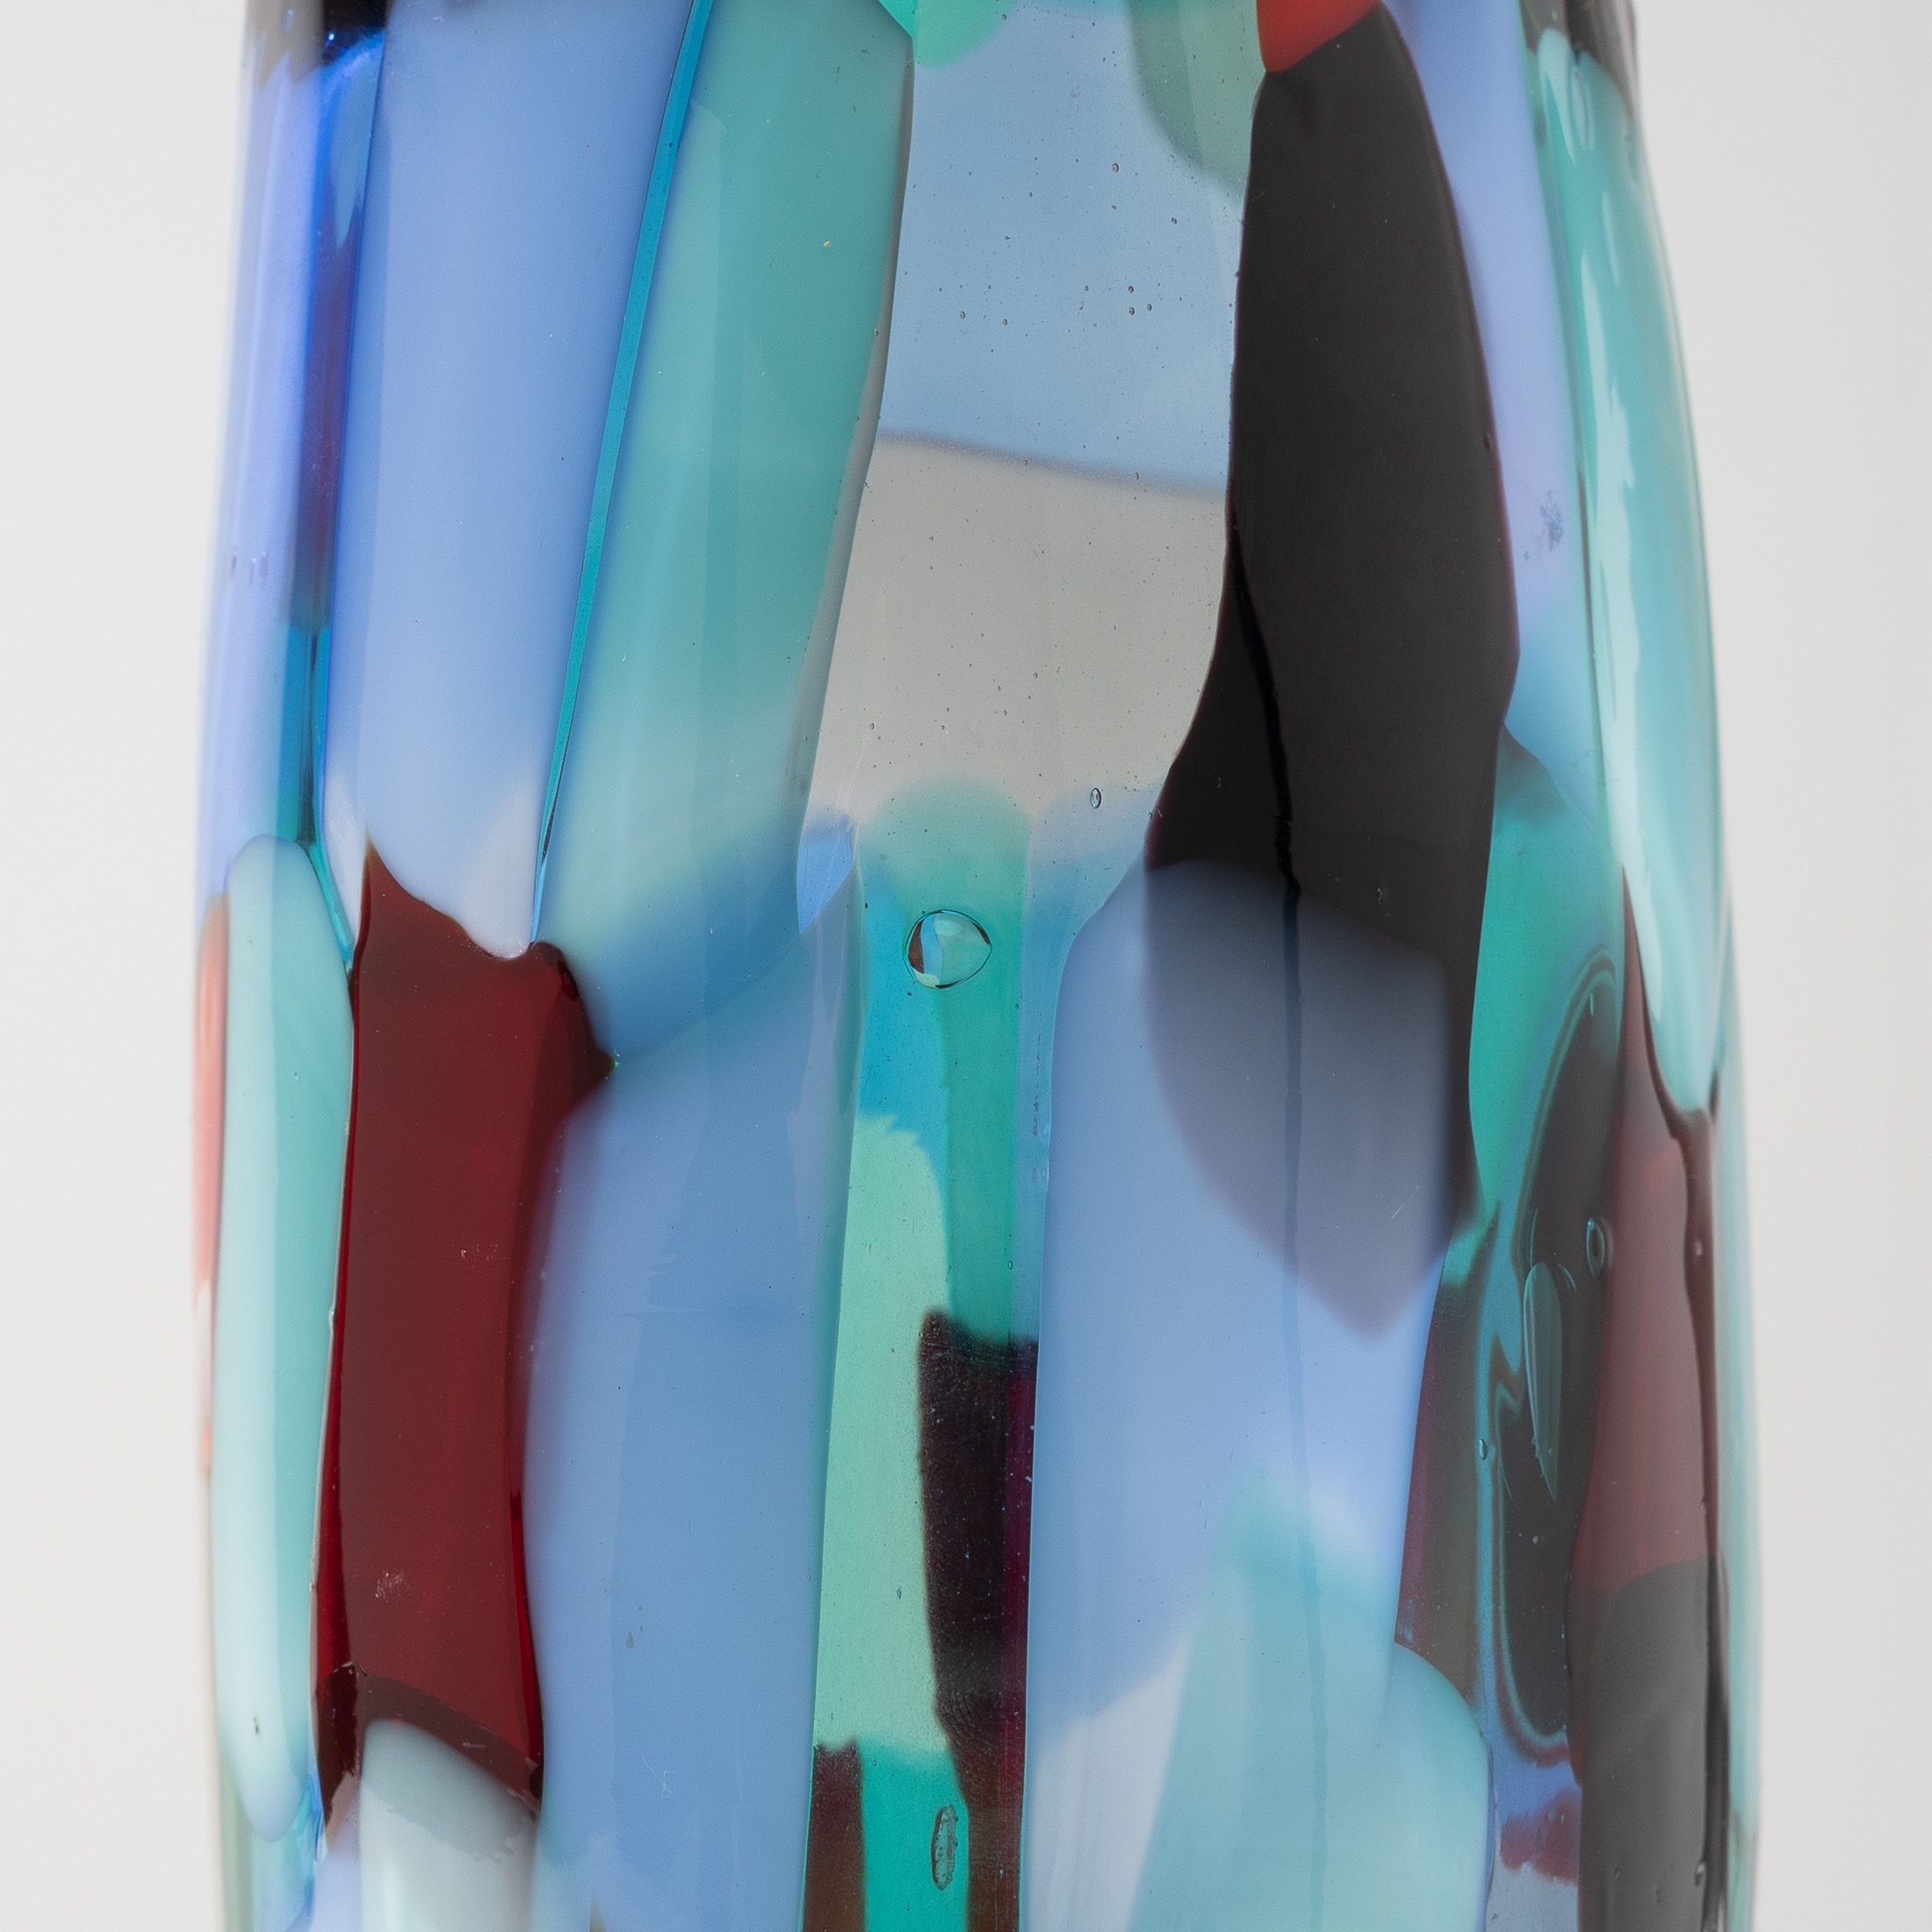 Pezzato arlechino bottle shaped vase by Fulvio Bianconi - model 4319 - Venini Murano - Italy -07